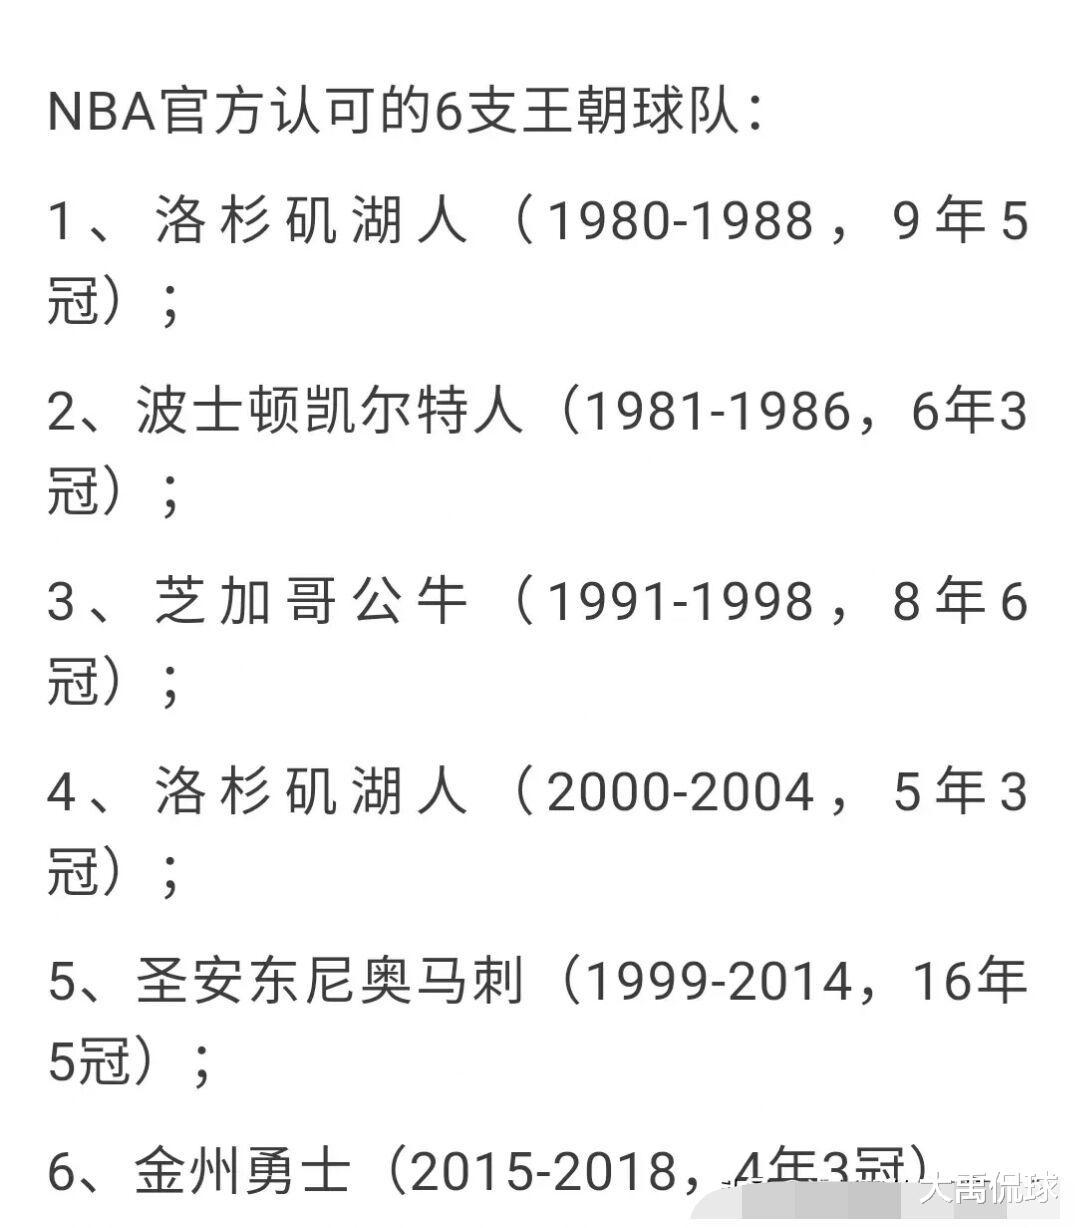 NBA官方认可的6支王朝球队(1)